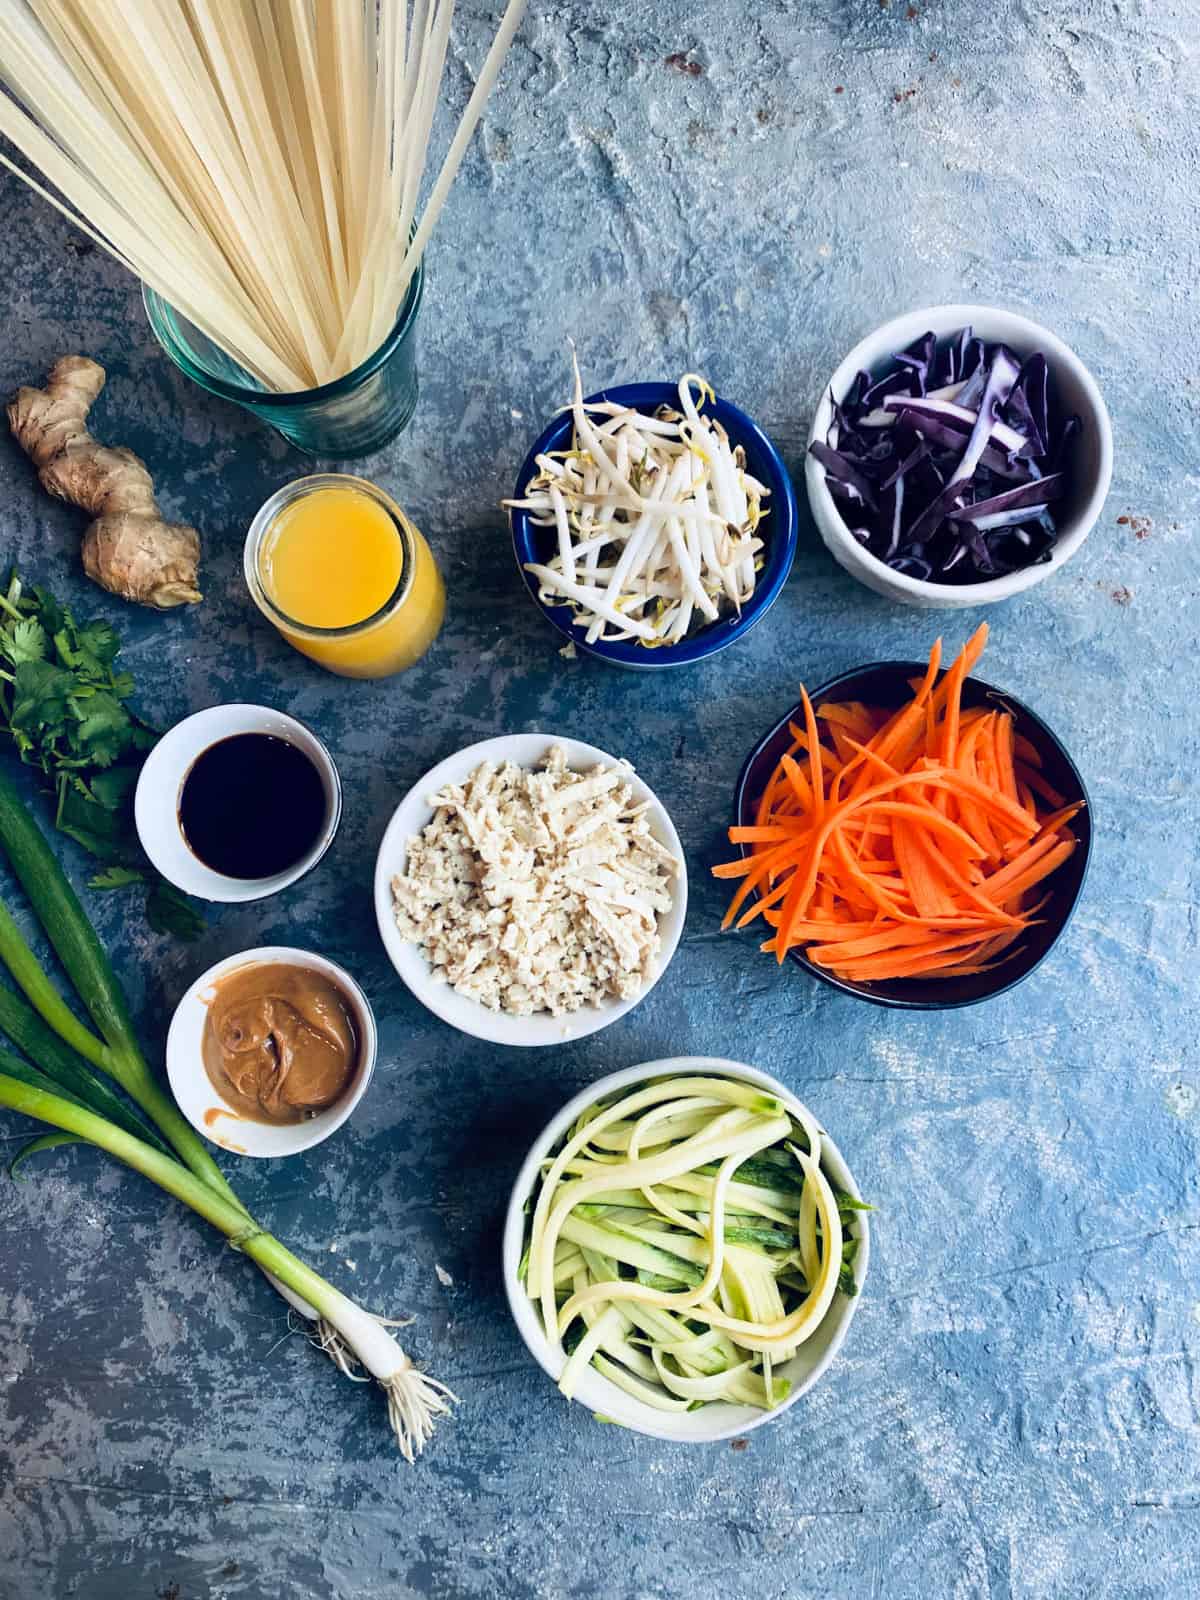 Ingredients to make Thai noodle salad
